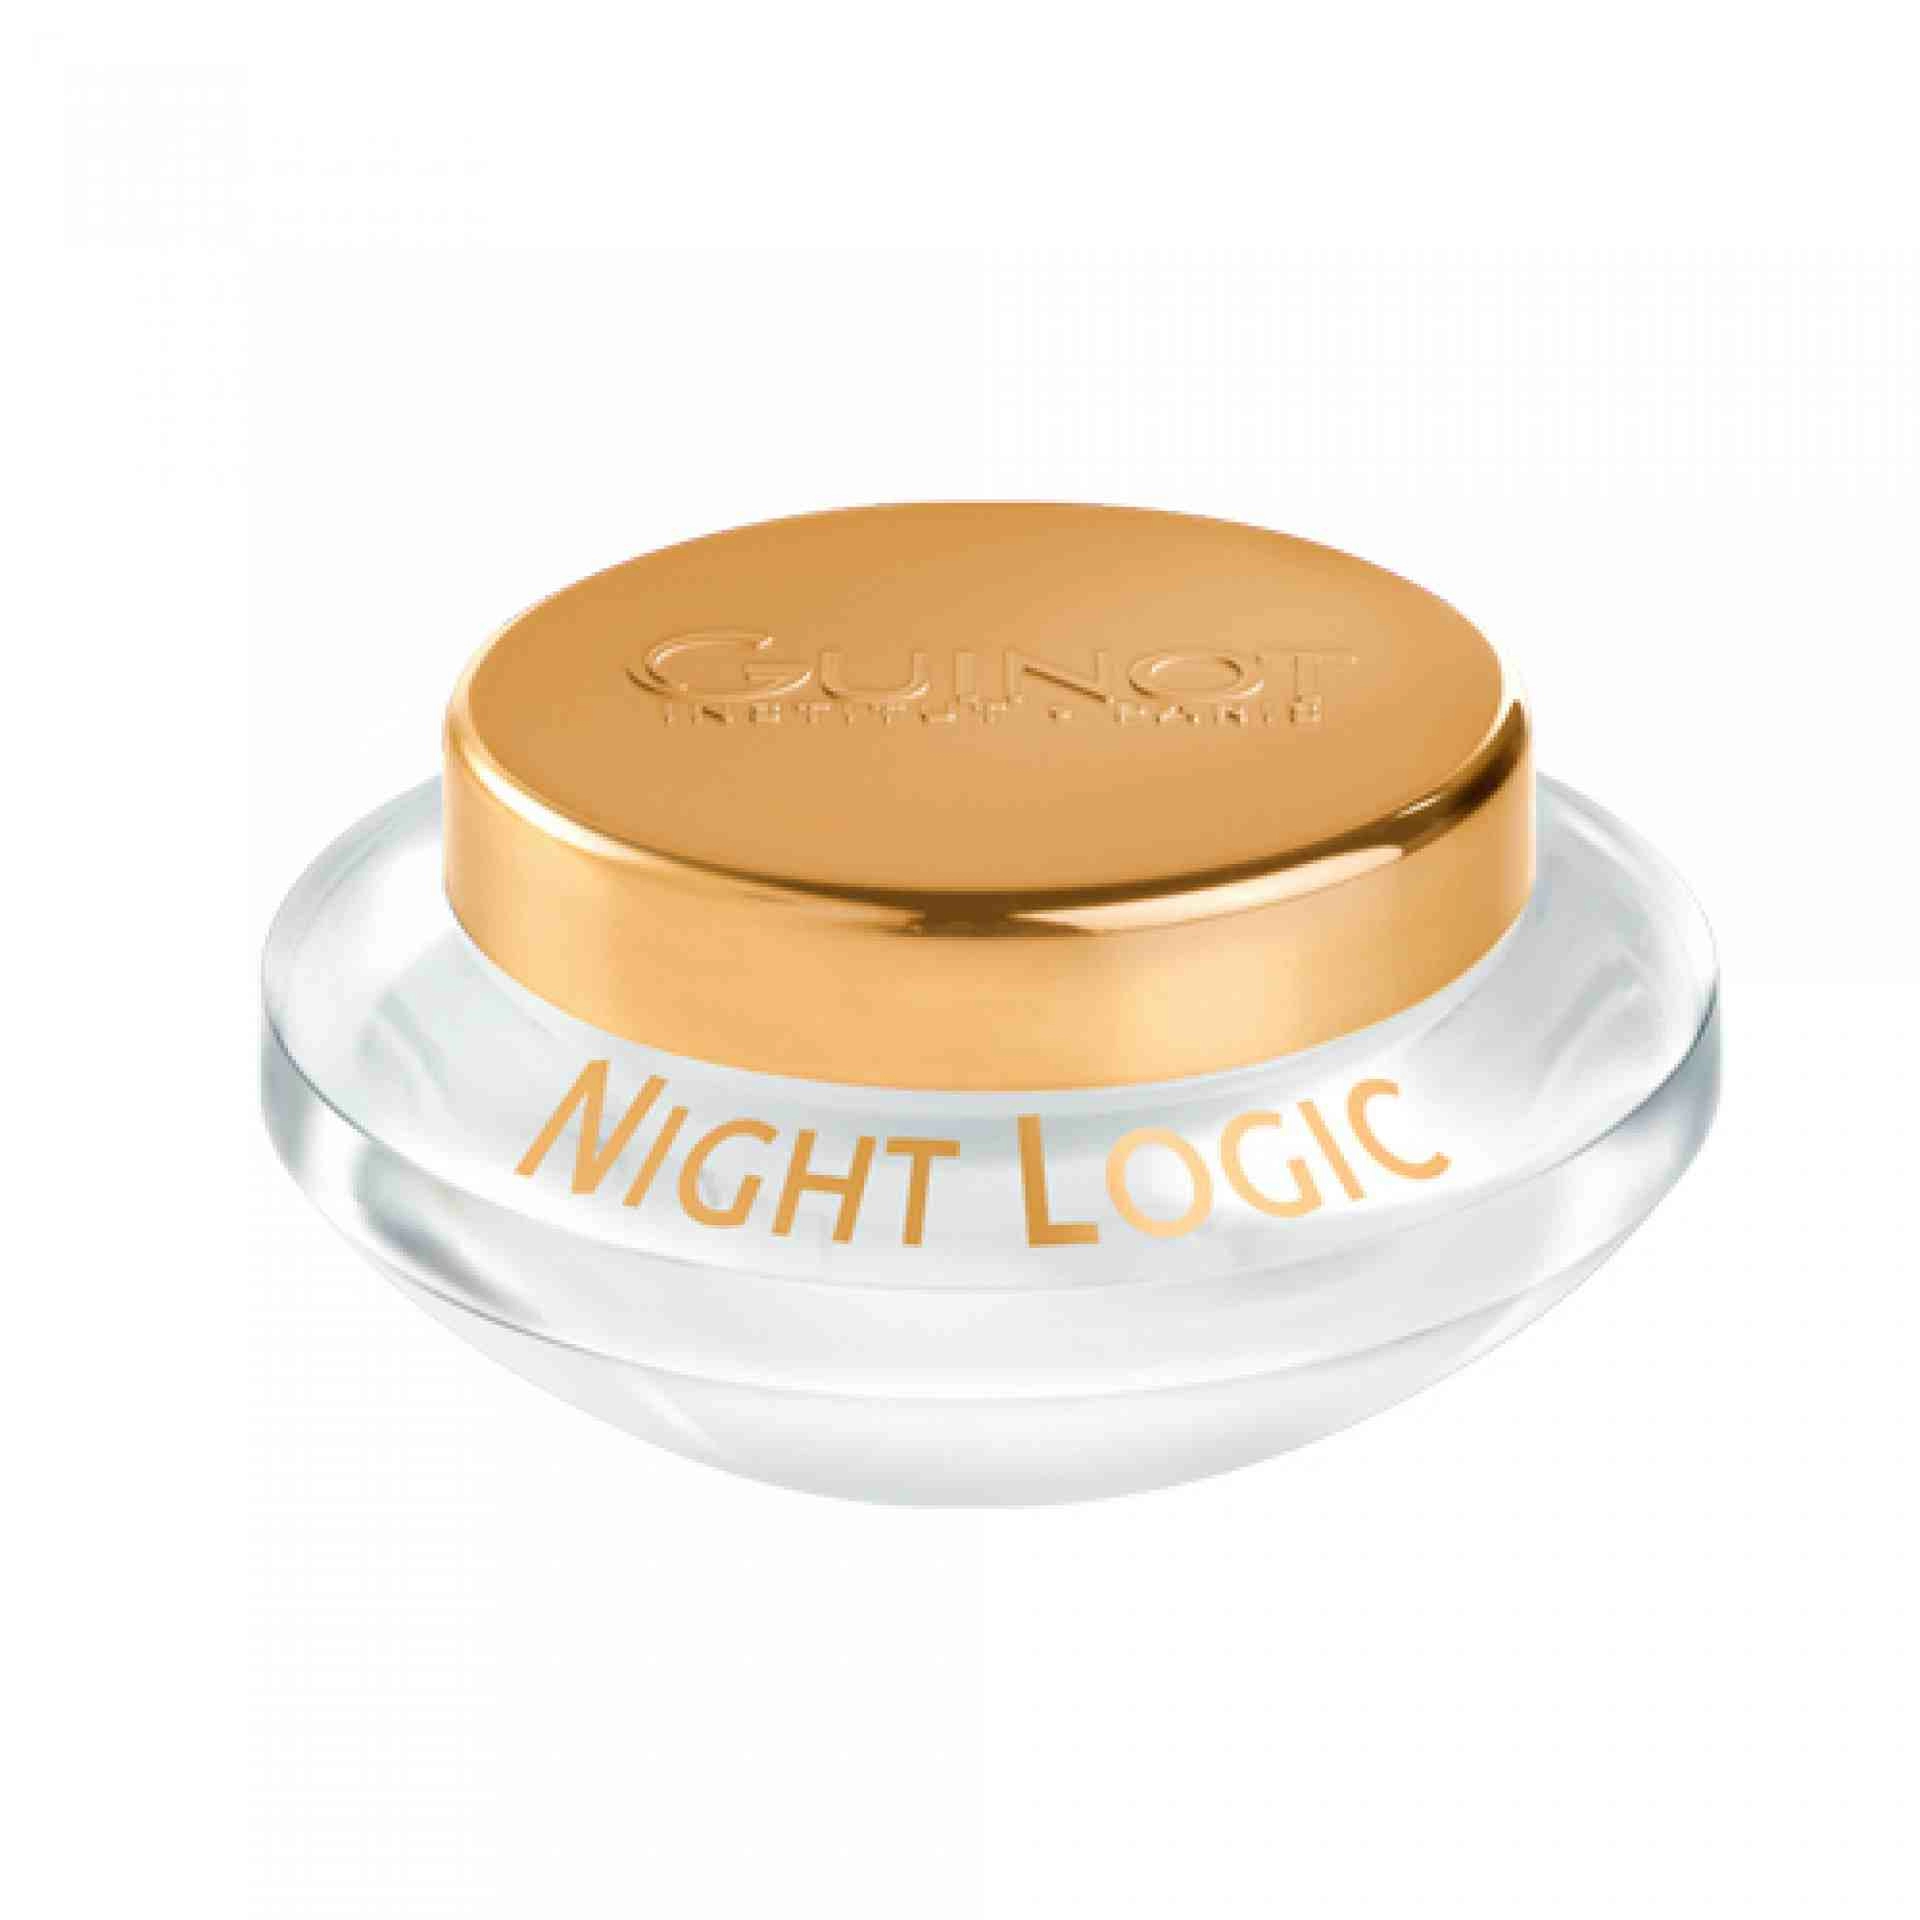 Crème Night Logic | Crema de Noche 50ml - Guinot ®